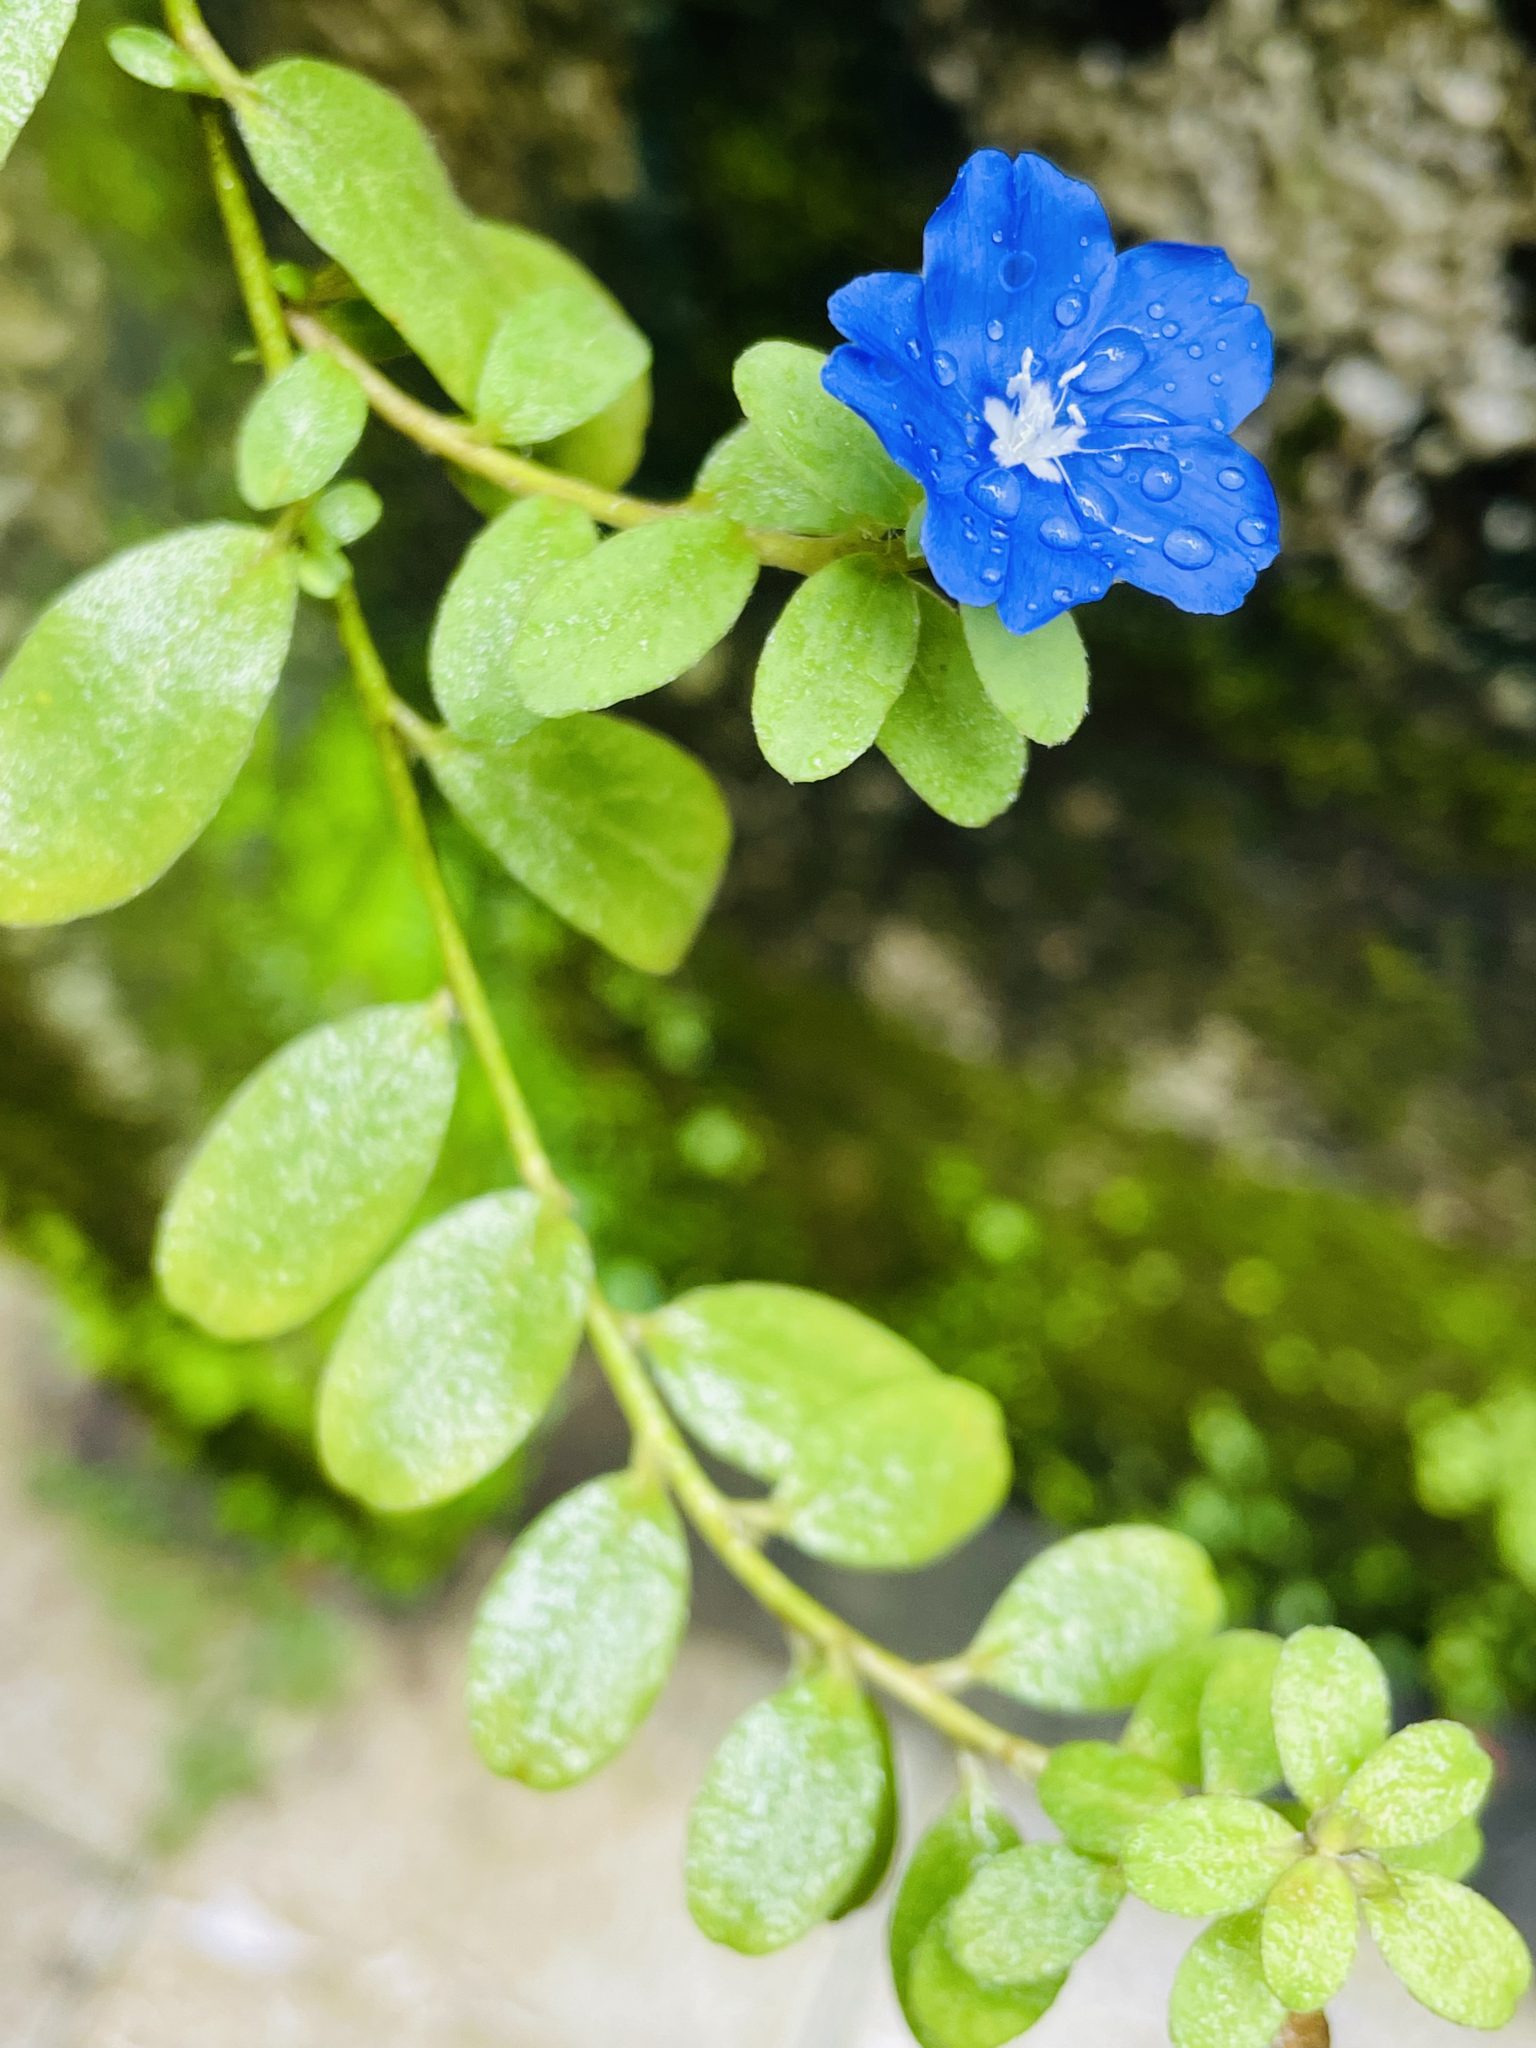 Vishnukraanti / Krishnakraanti / Dwarf Morning Glory flower from our garden